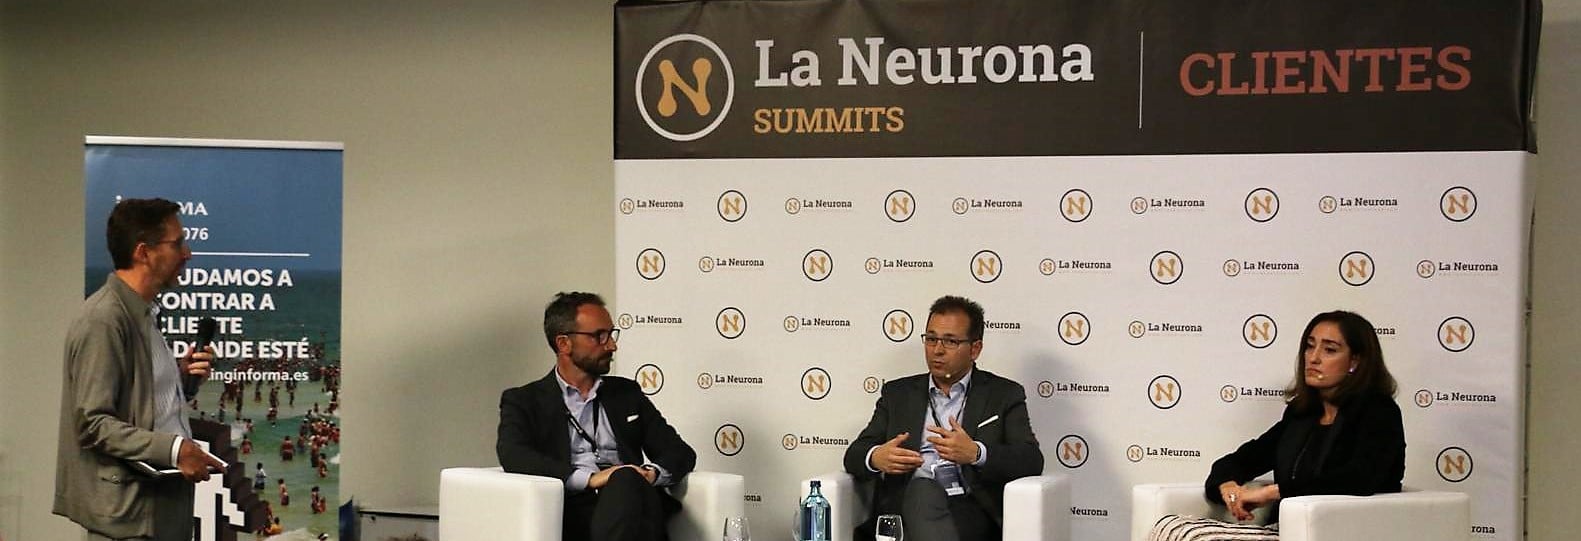 La Neurona Summit Clientes Barcelona - Mesa sobre Social Selling